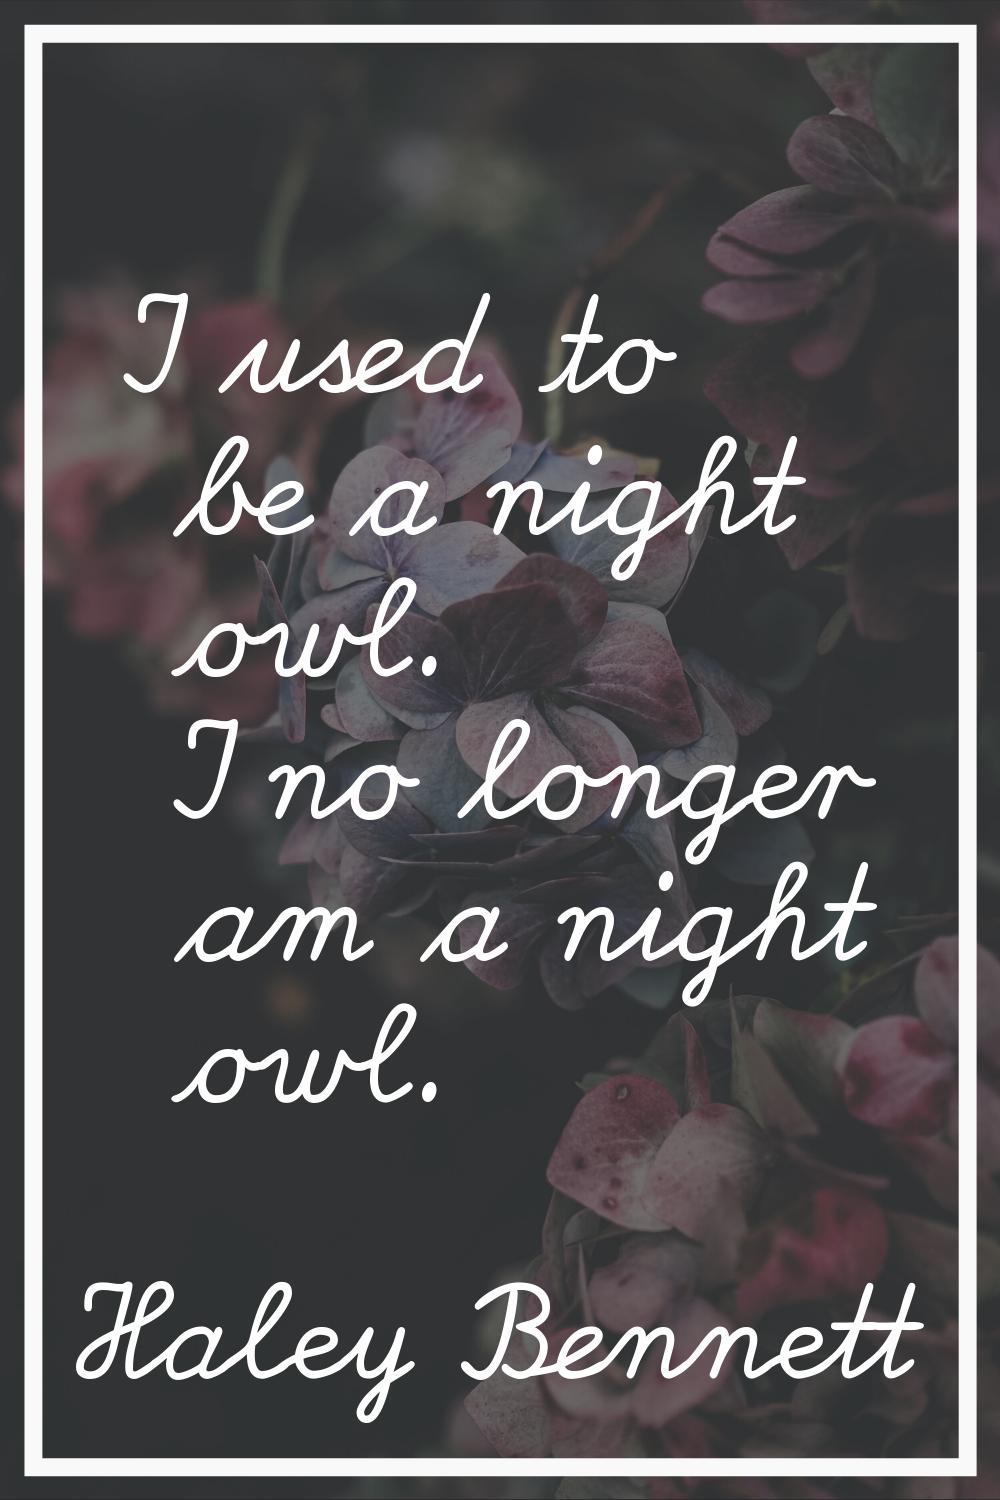 I used to be a night owl. I no longer am a night owl.